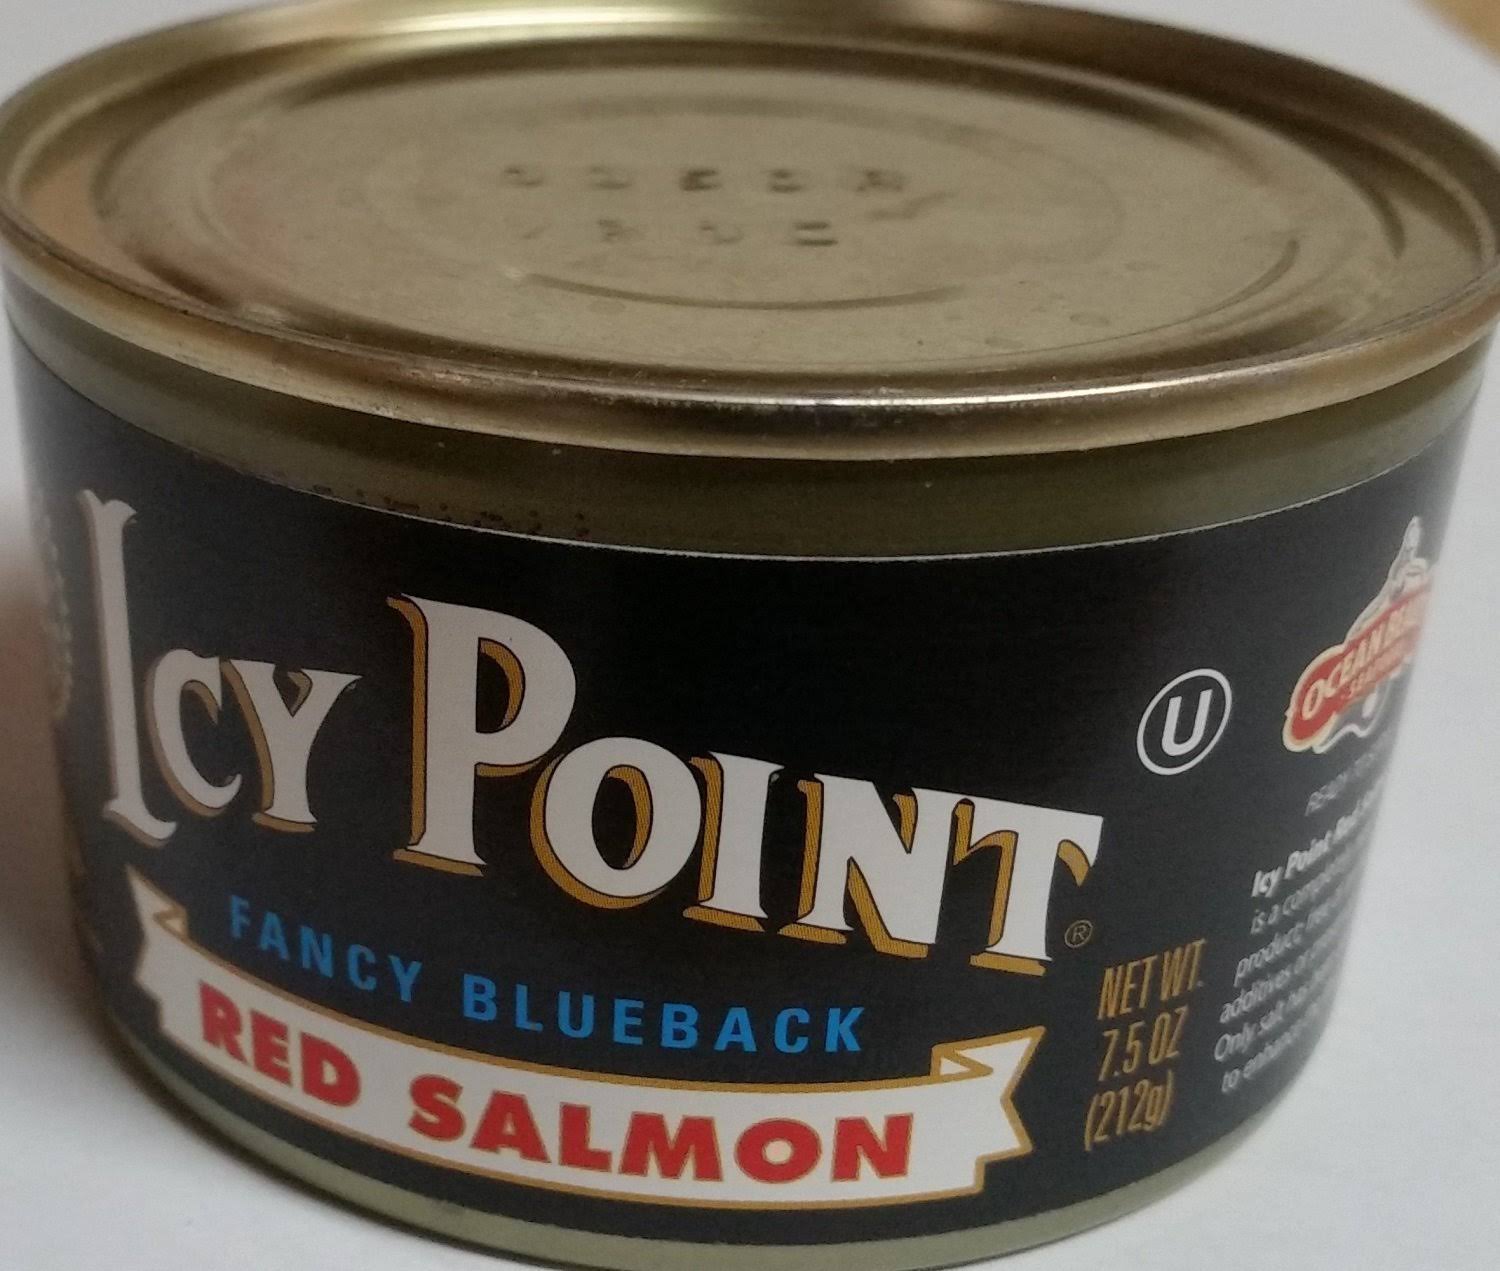 Icy Point Alaska Red Salmon Sockeye, 7.5-Ounce Can